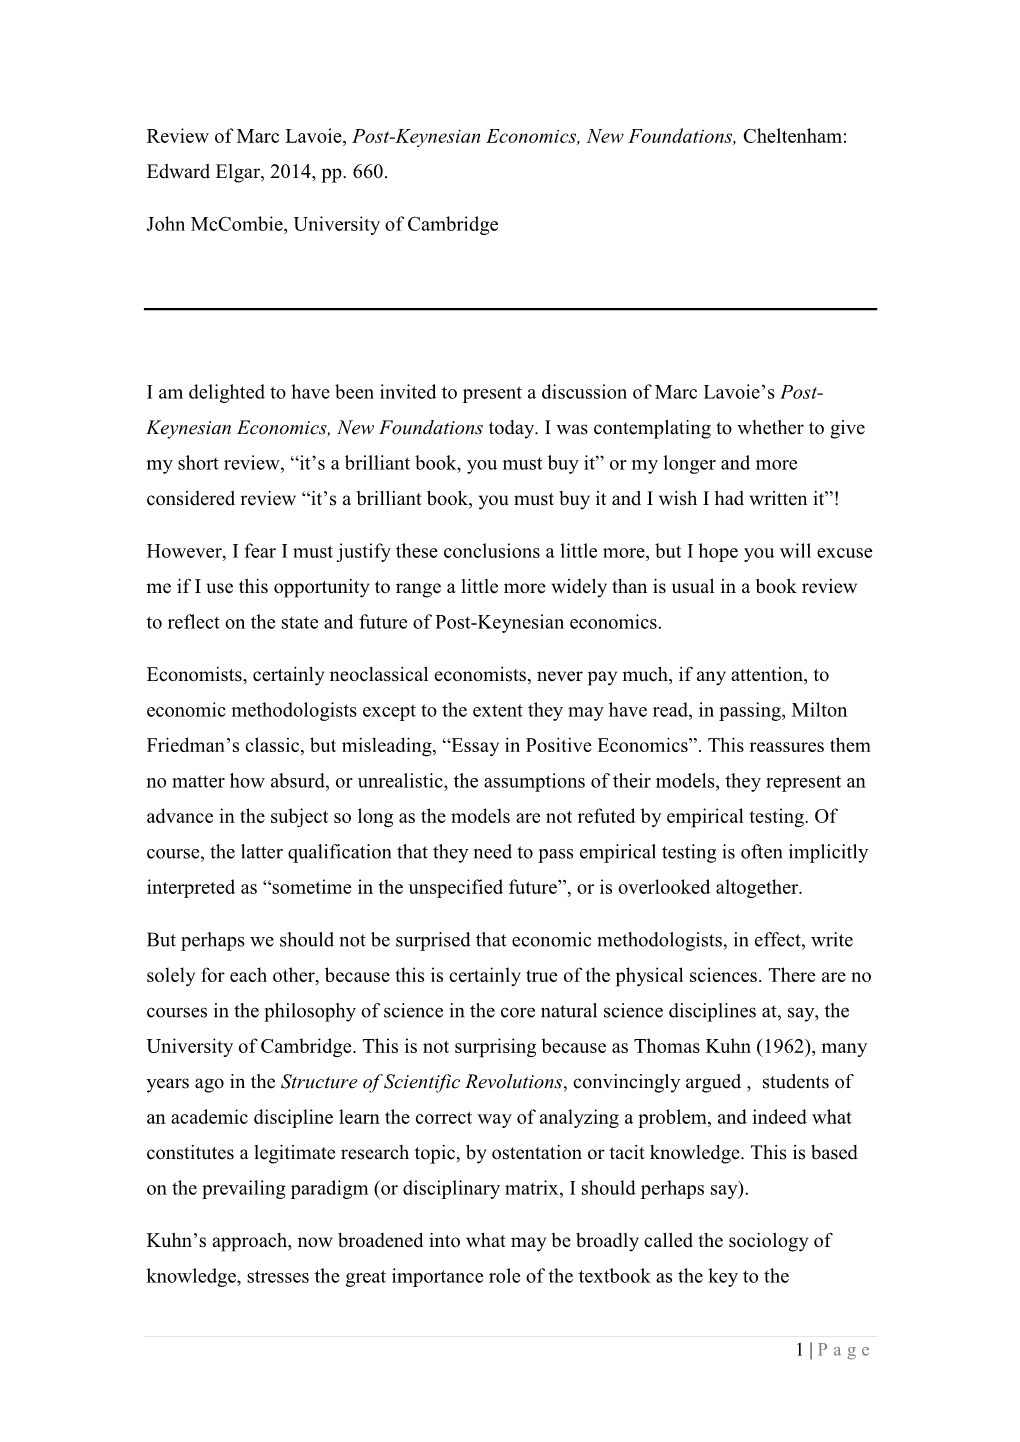 Review of Marc Lavoie, Post-Keynesian Economics, New Foundations, Cheltenham: Edward Elgar, 2014, Pp